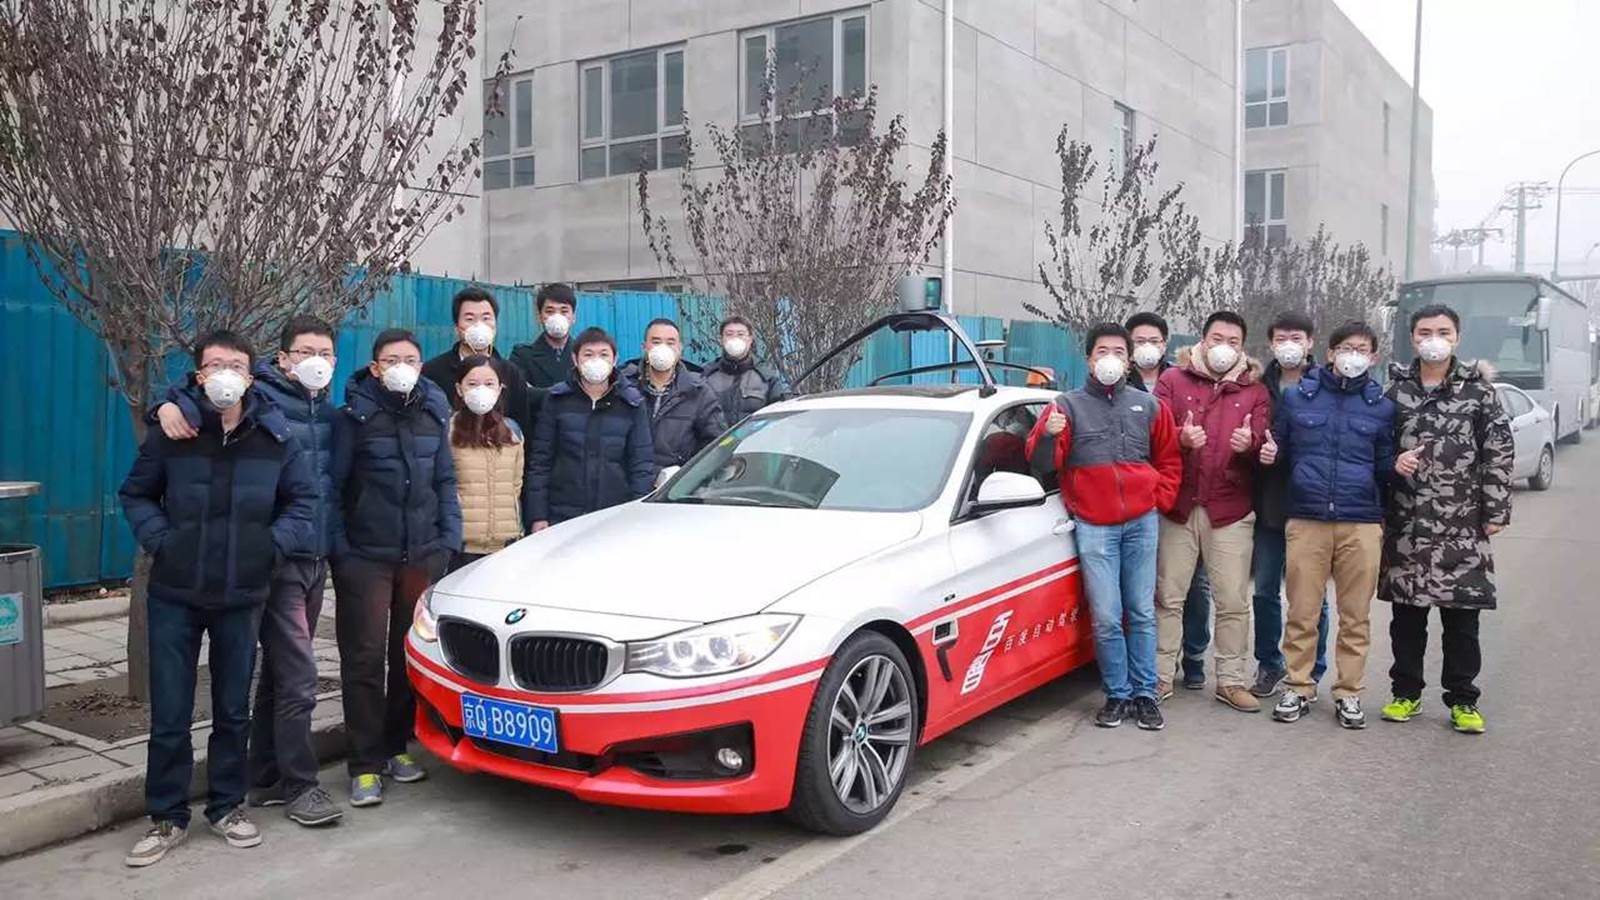 Baidu team gathers around autonomous vehicle, a modified BMW 3 Series